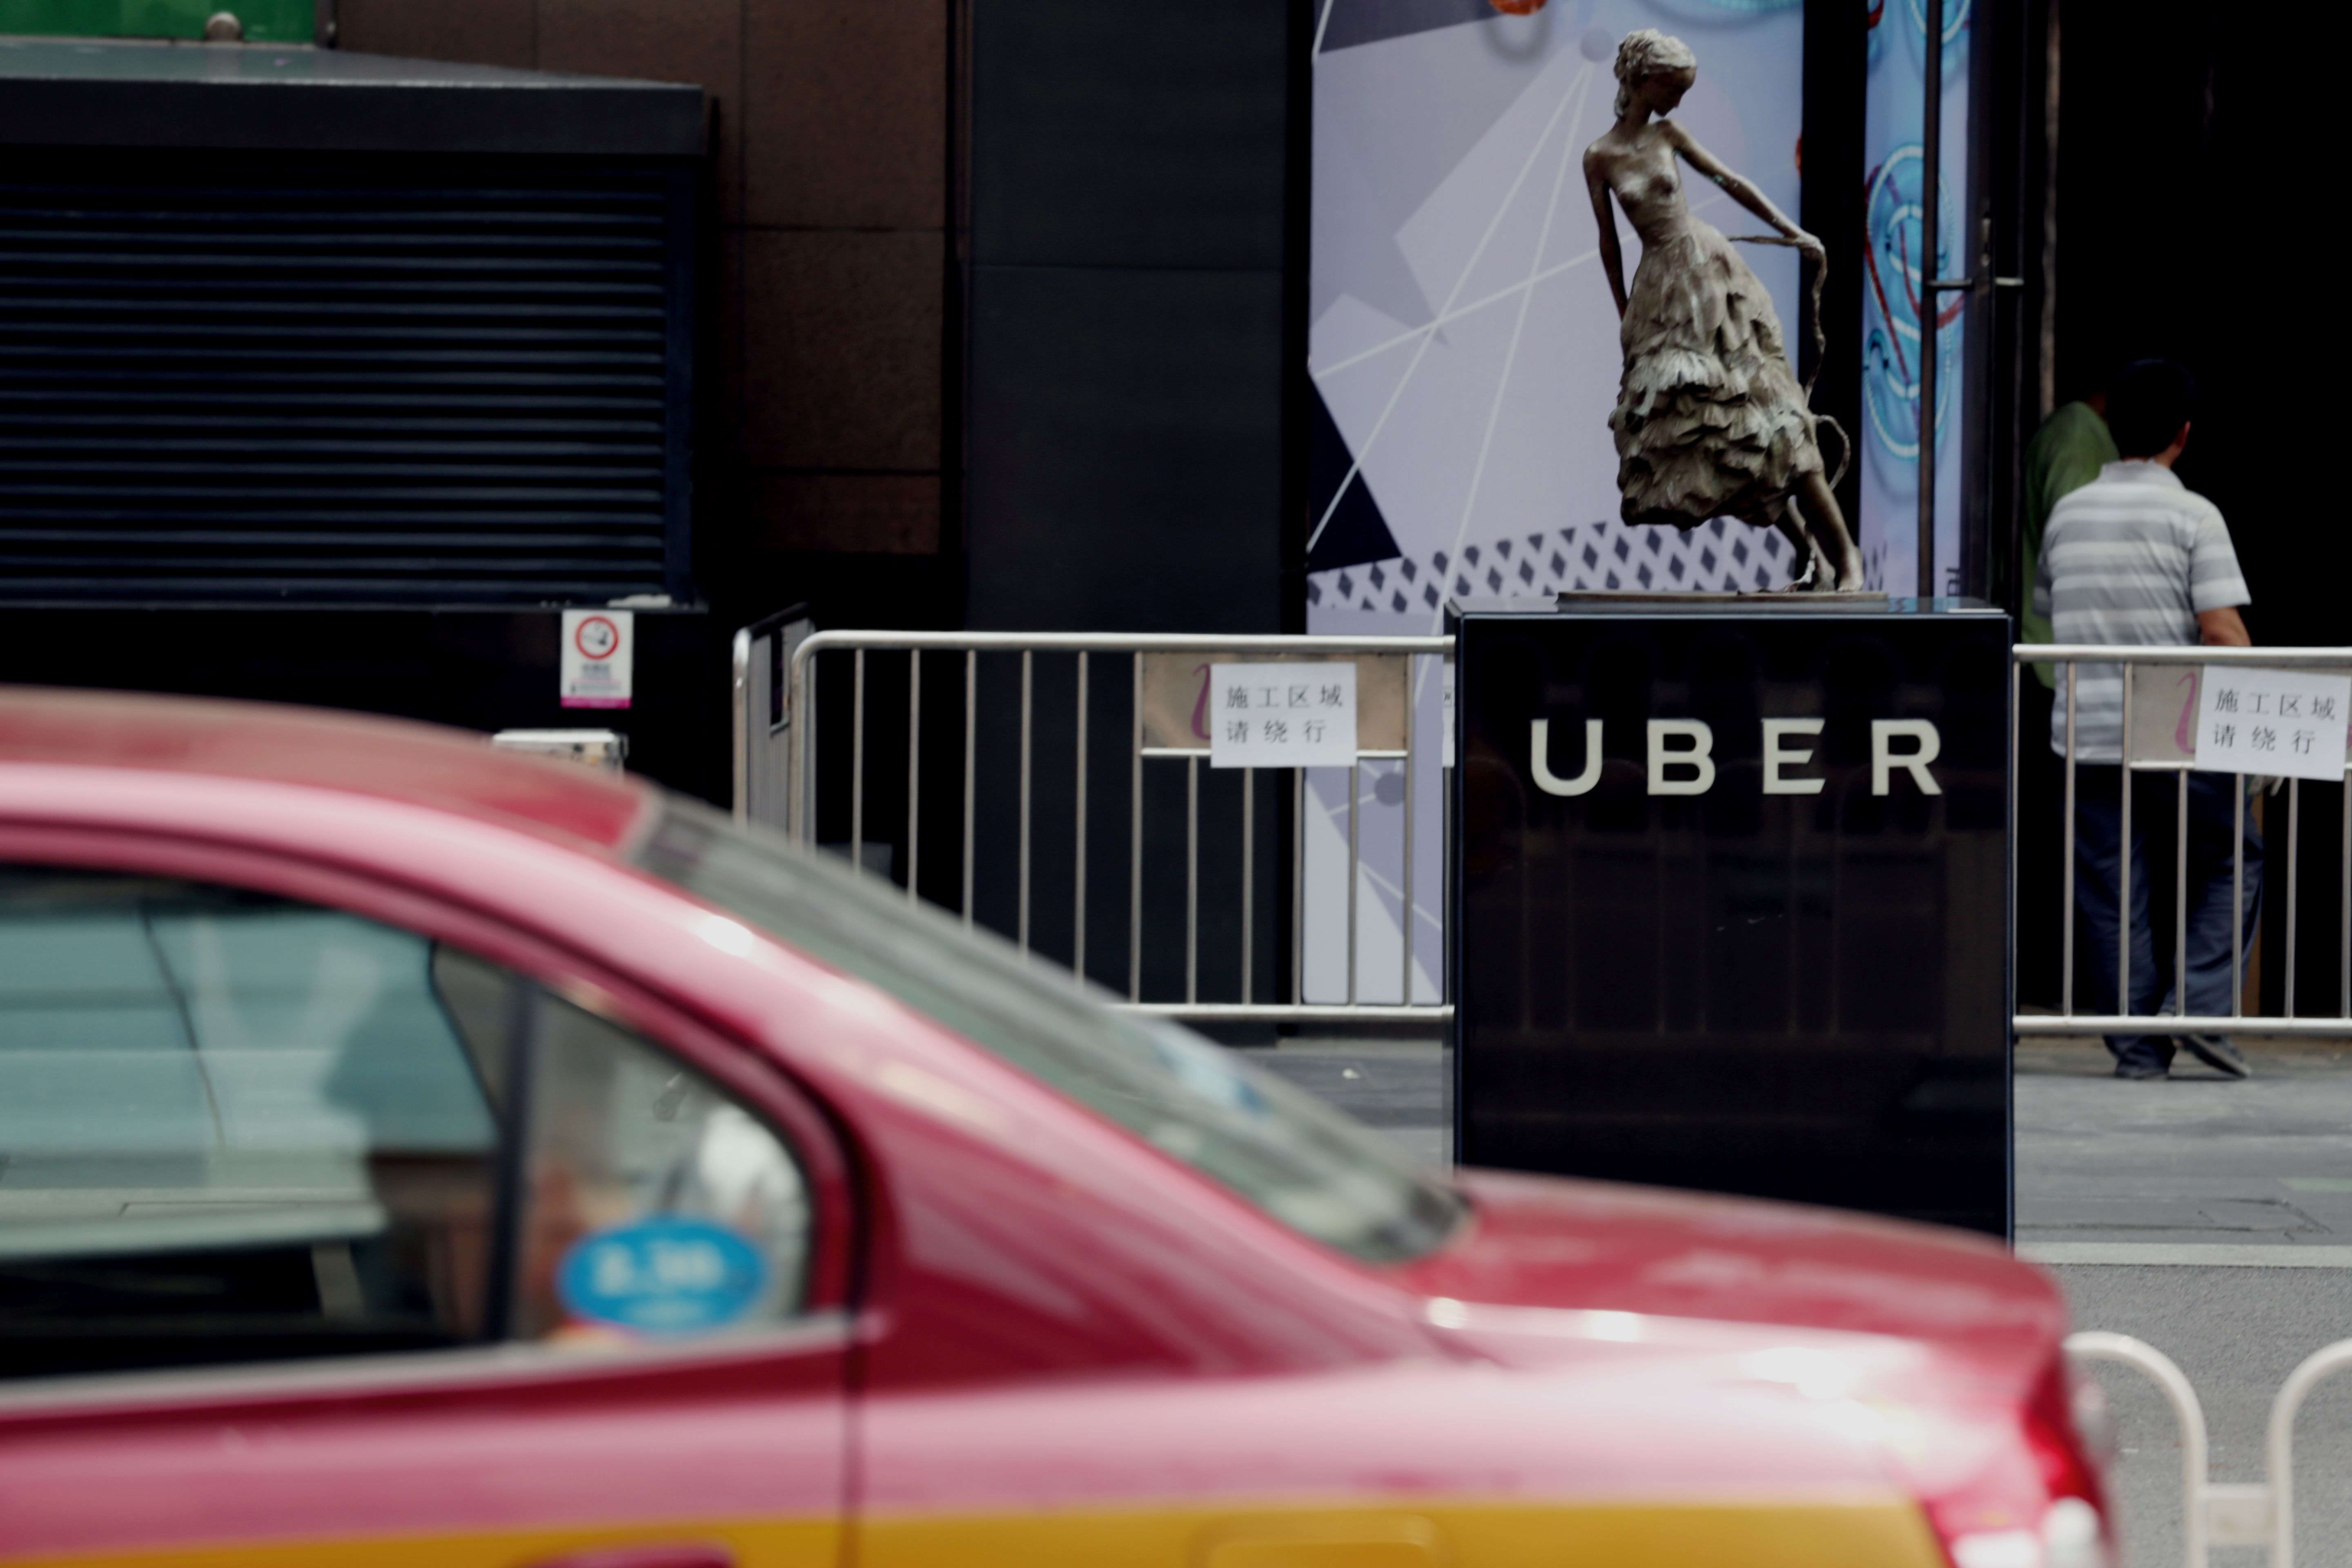 Blue skies ahead for Uber’s new enterprise?